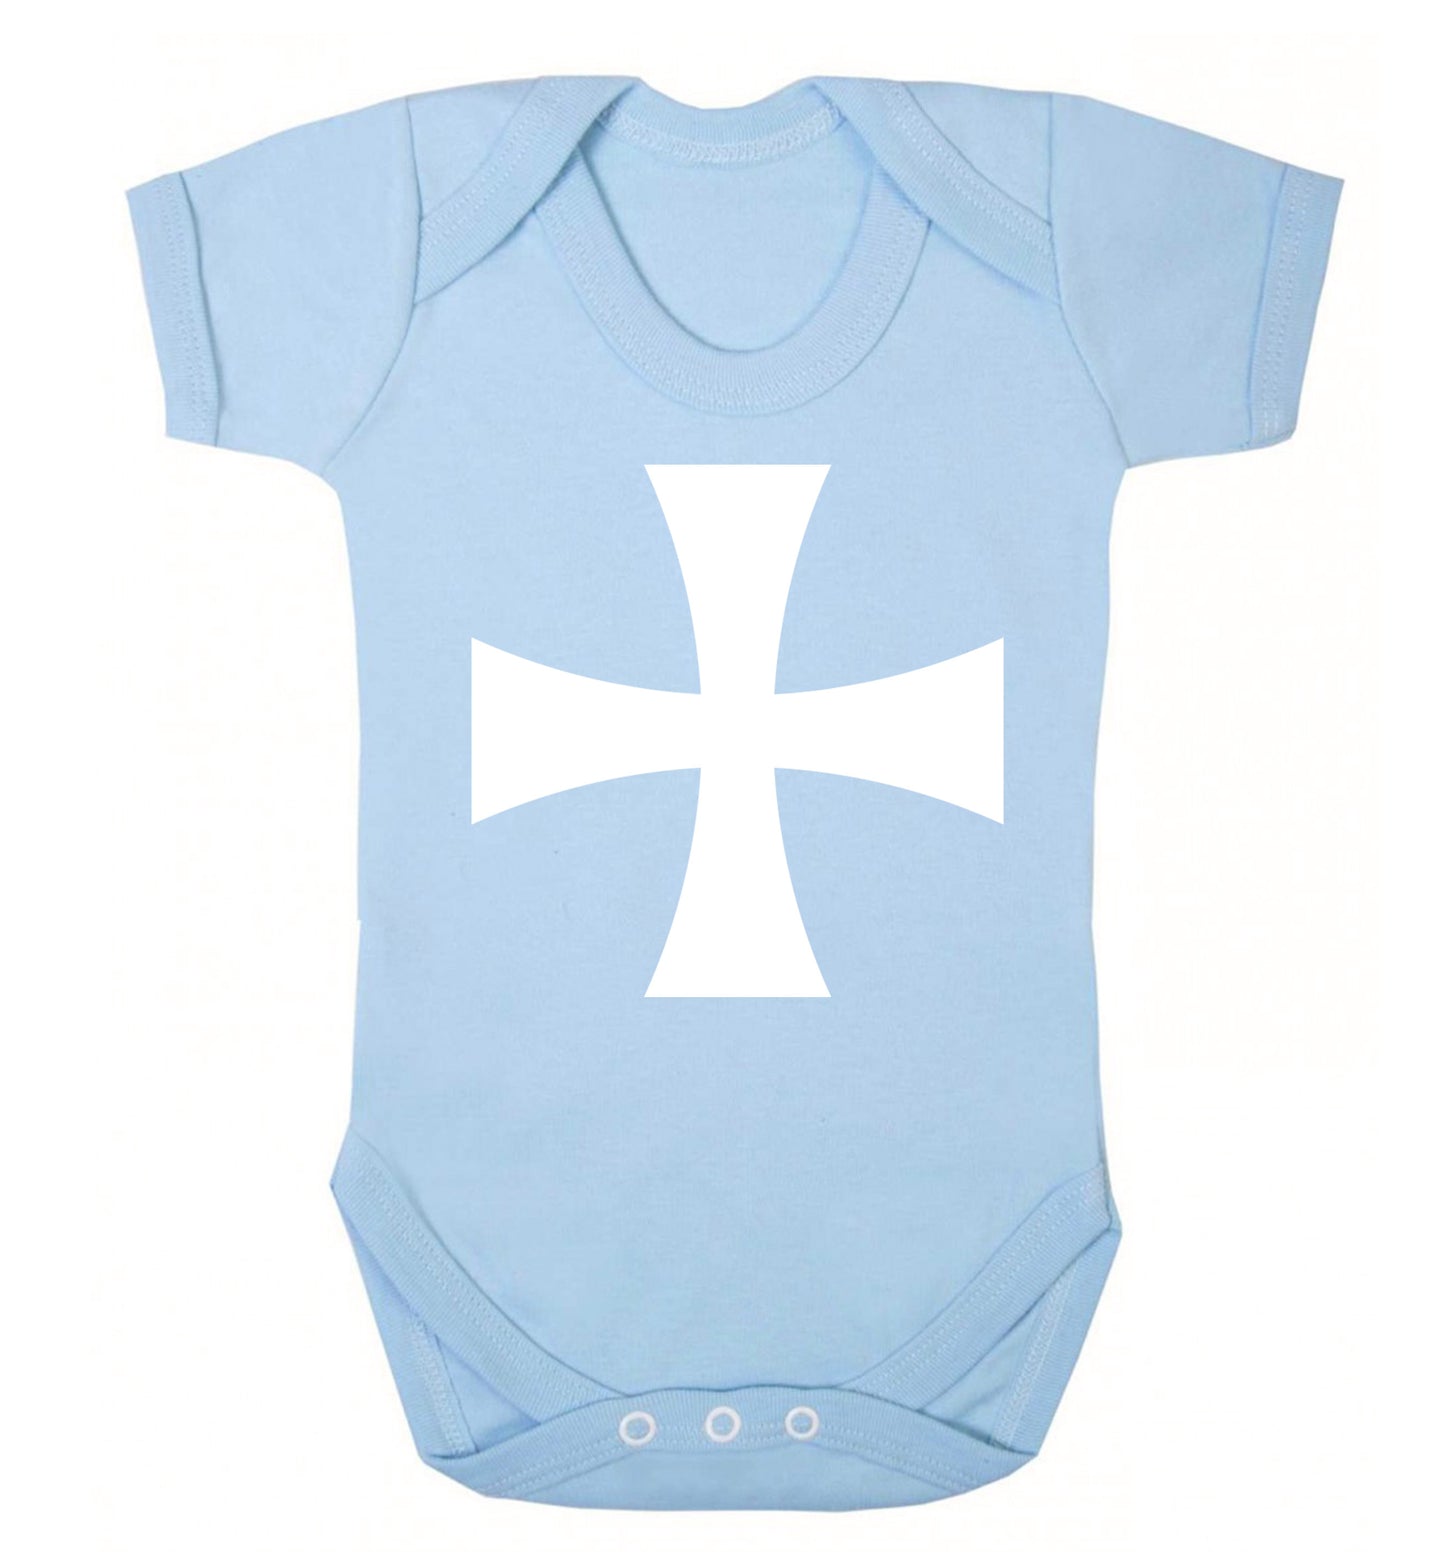 Knights Templar cross Baby Vest pale blue 18-24 months